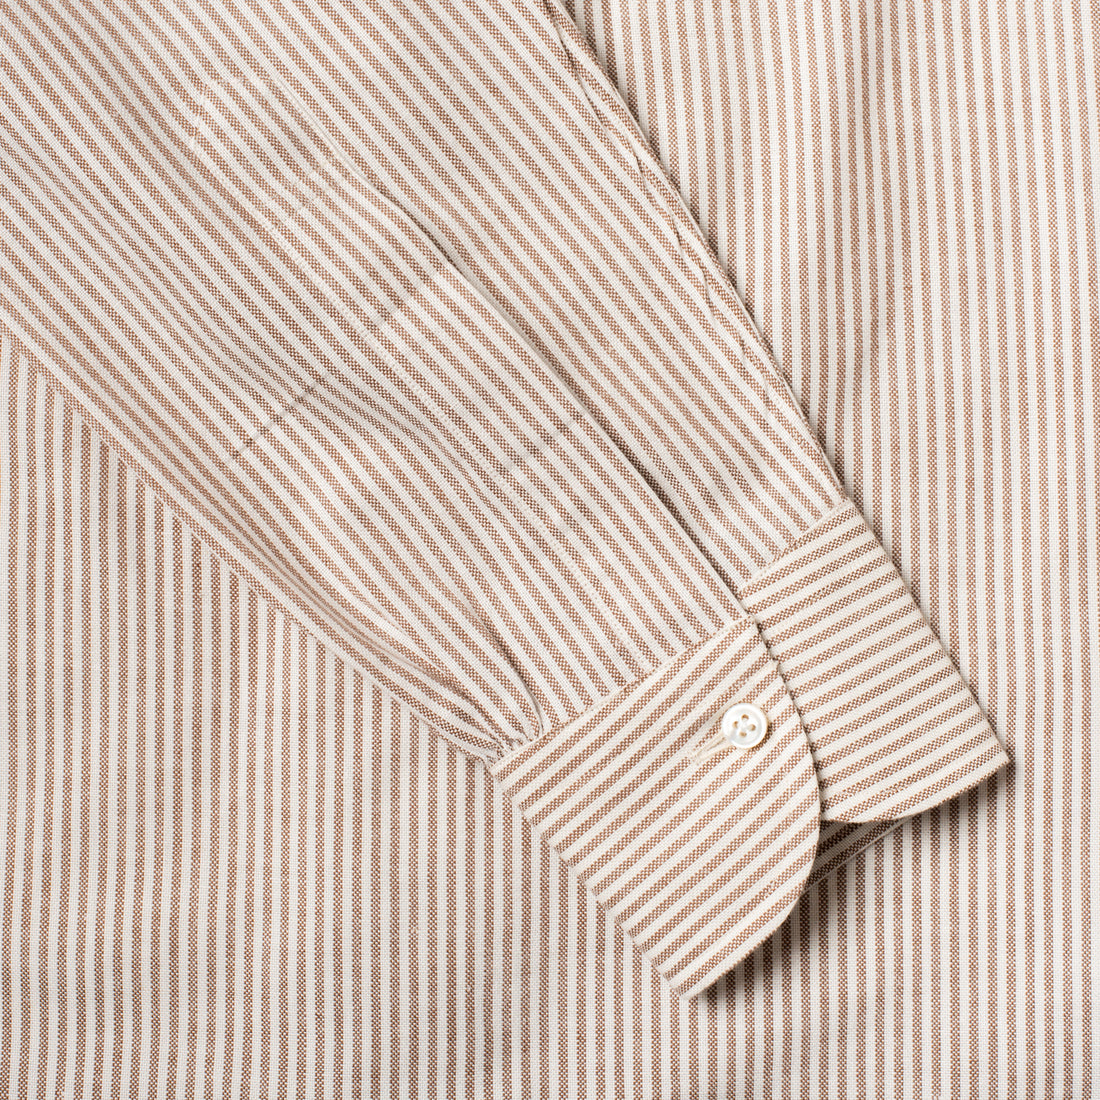 Bryceland's Perfect OCBD Shirt Brown Stripe